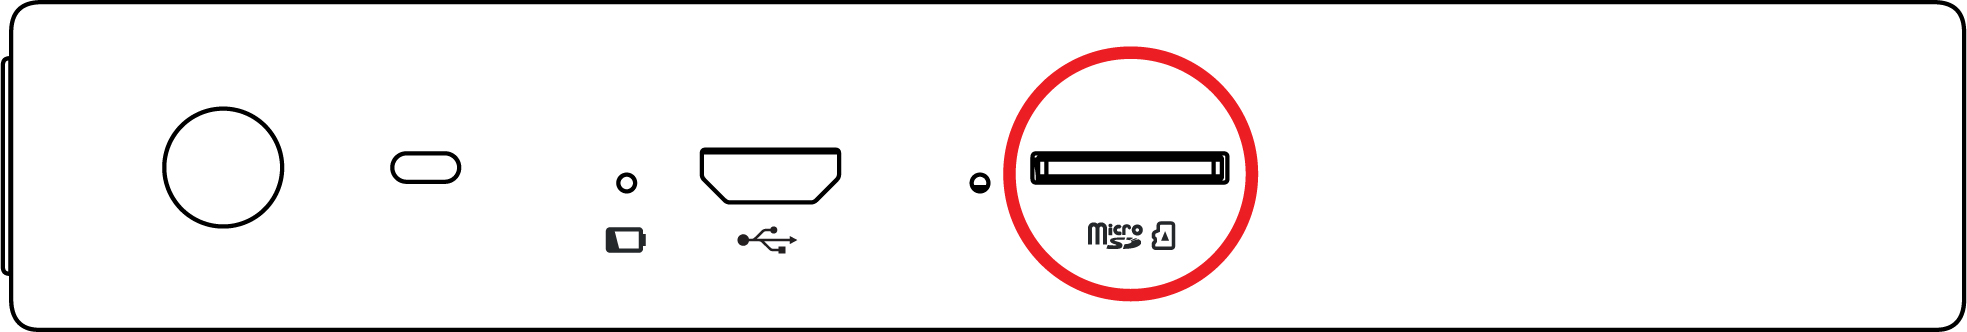 Mint_Camera_MicroSD_Slot.jpg